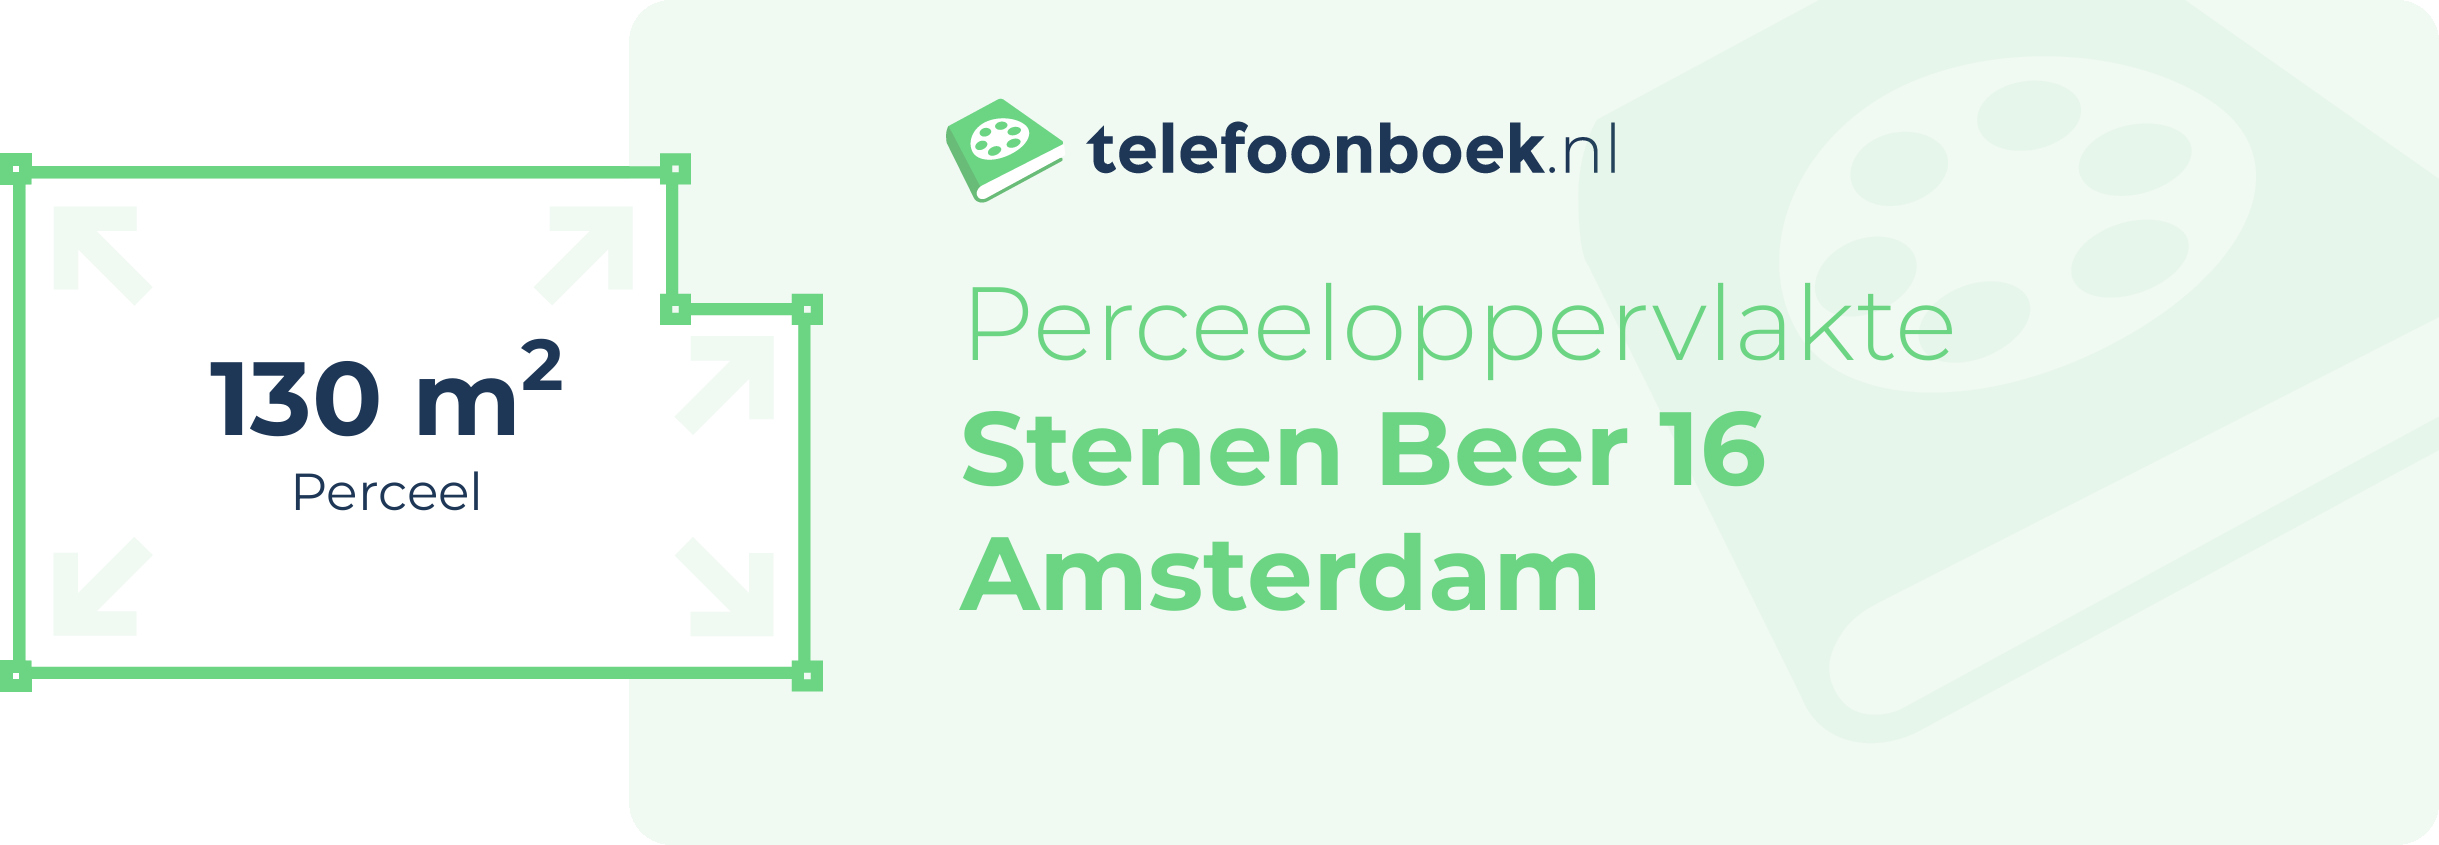 Perceeloppervlakte Stenen Beer 16 Amsterdam